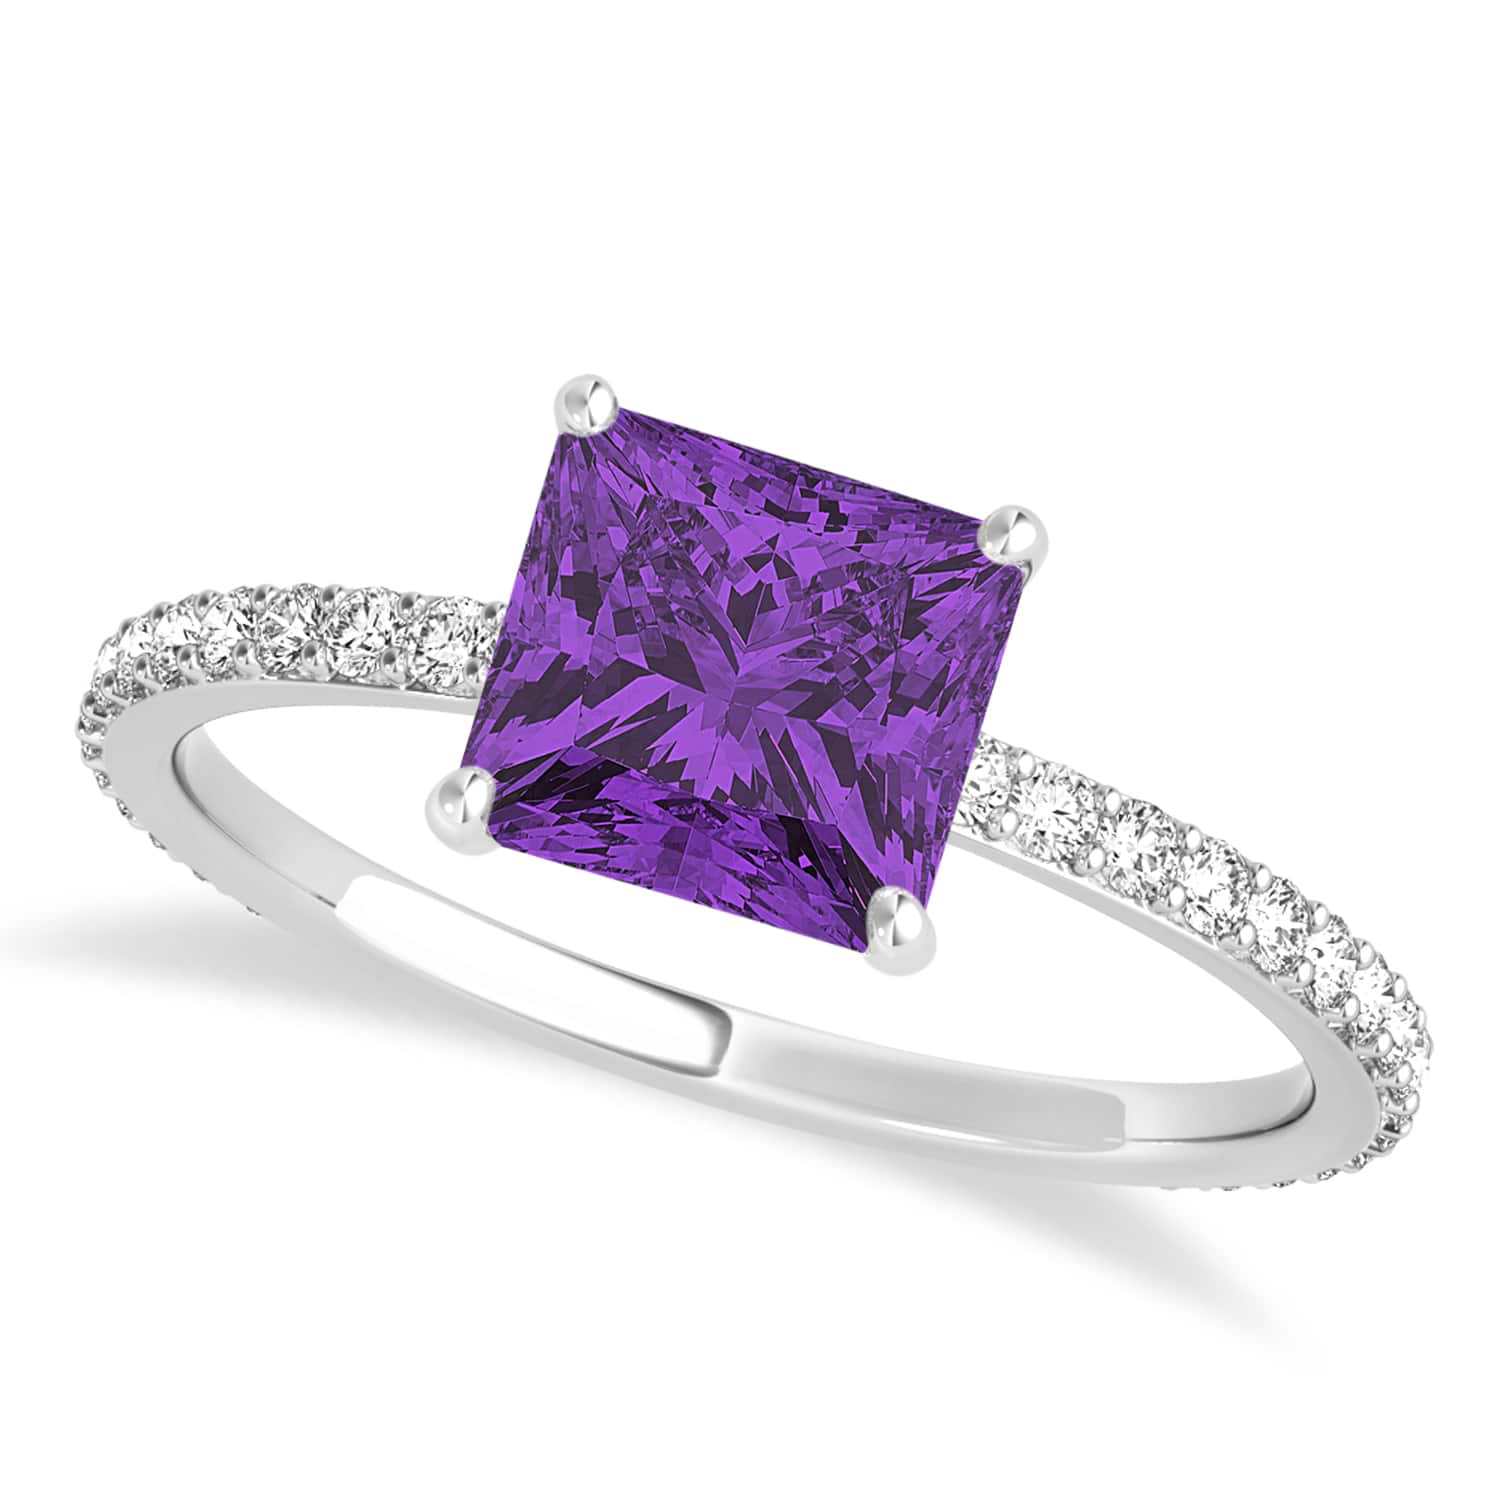 Princess Amethyst & Diamond Hidden Halo Engagement Ring 14k White Gold (0.89ct)